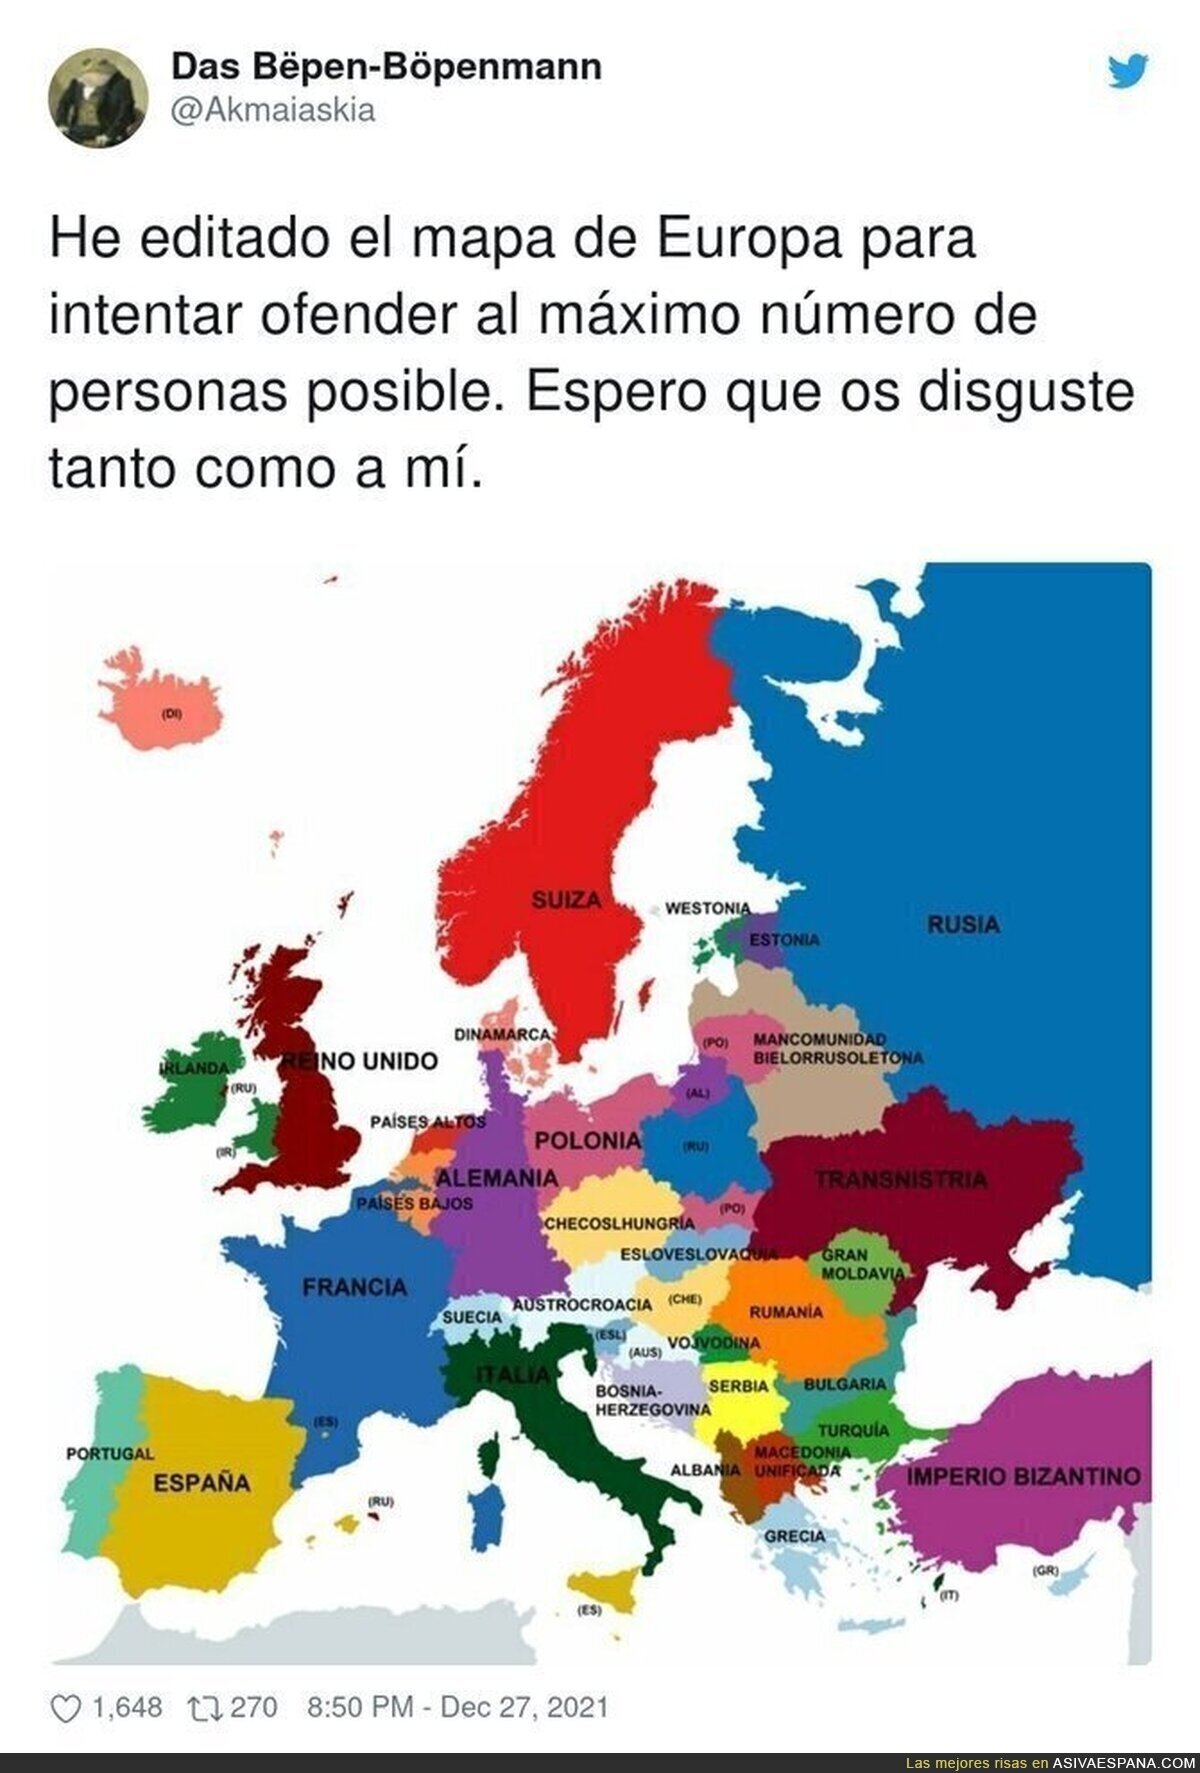 El mapa ofensivo europeo